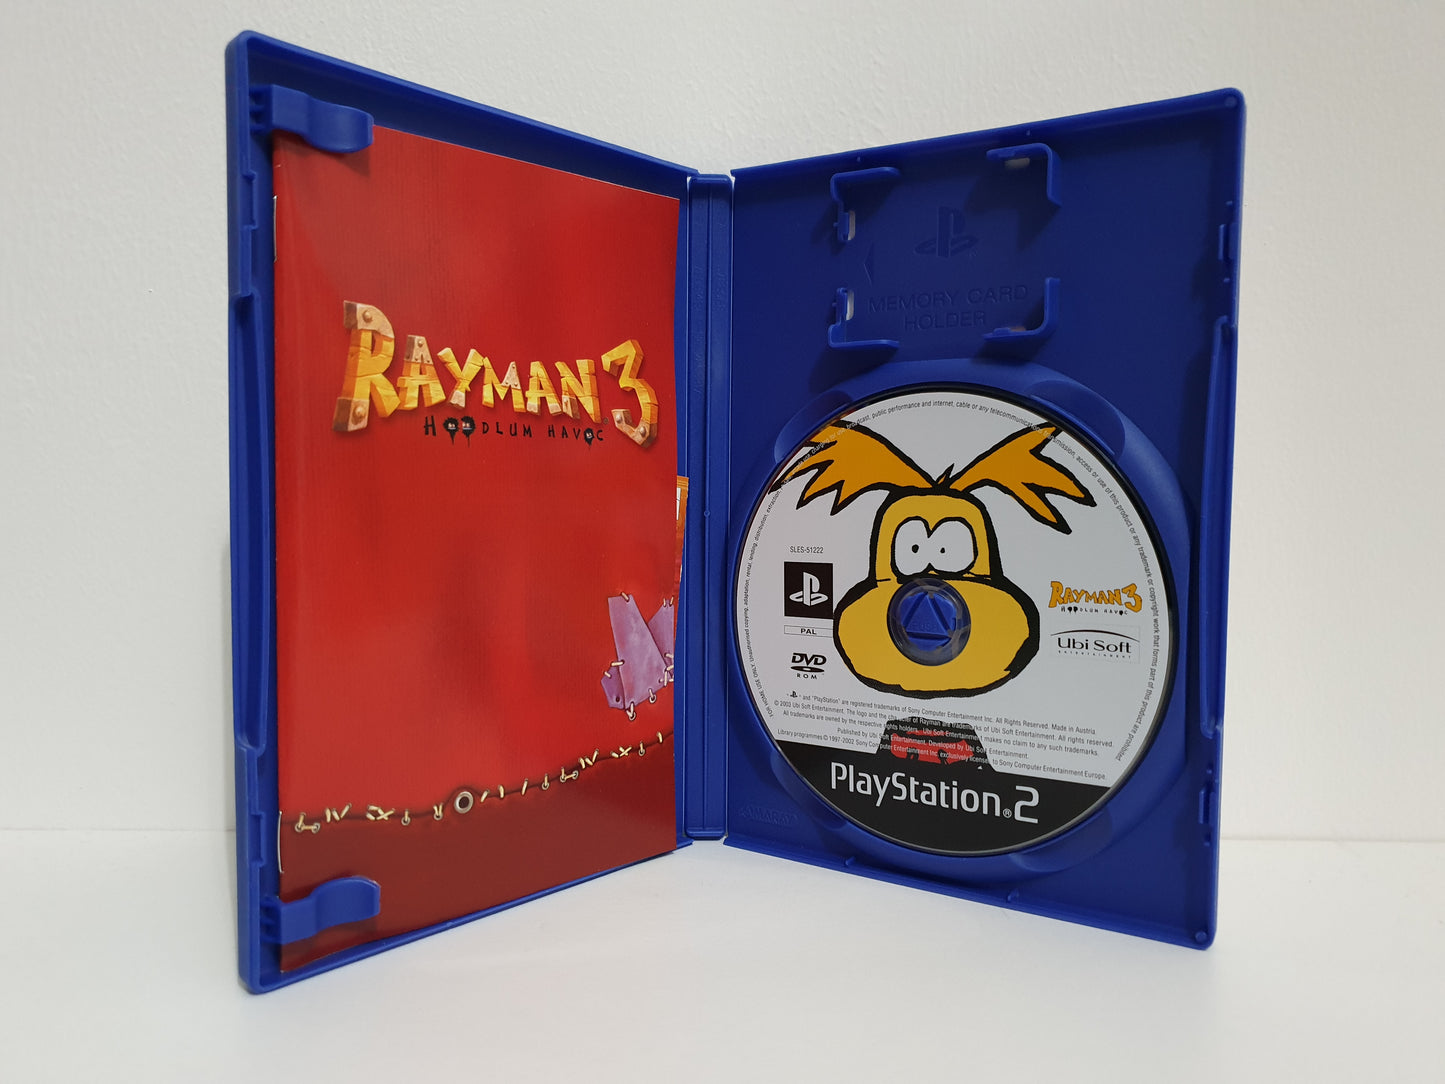 Rayman 3 Hoodlum Havoc PS2 - Occasion excellent état